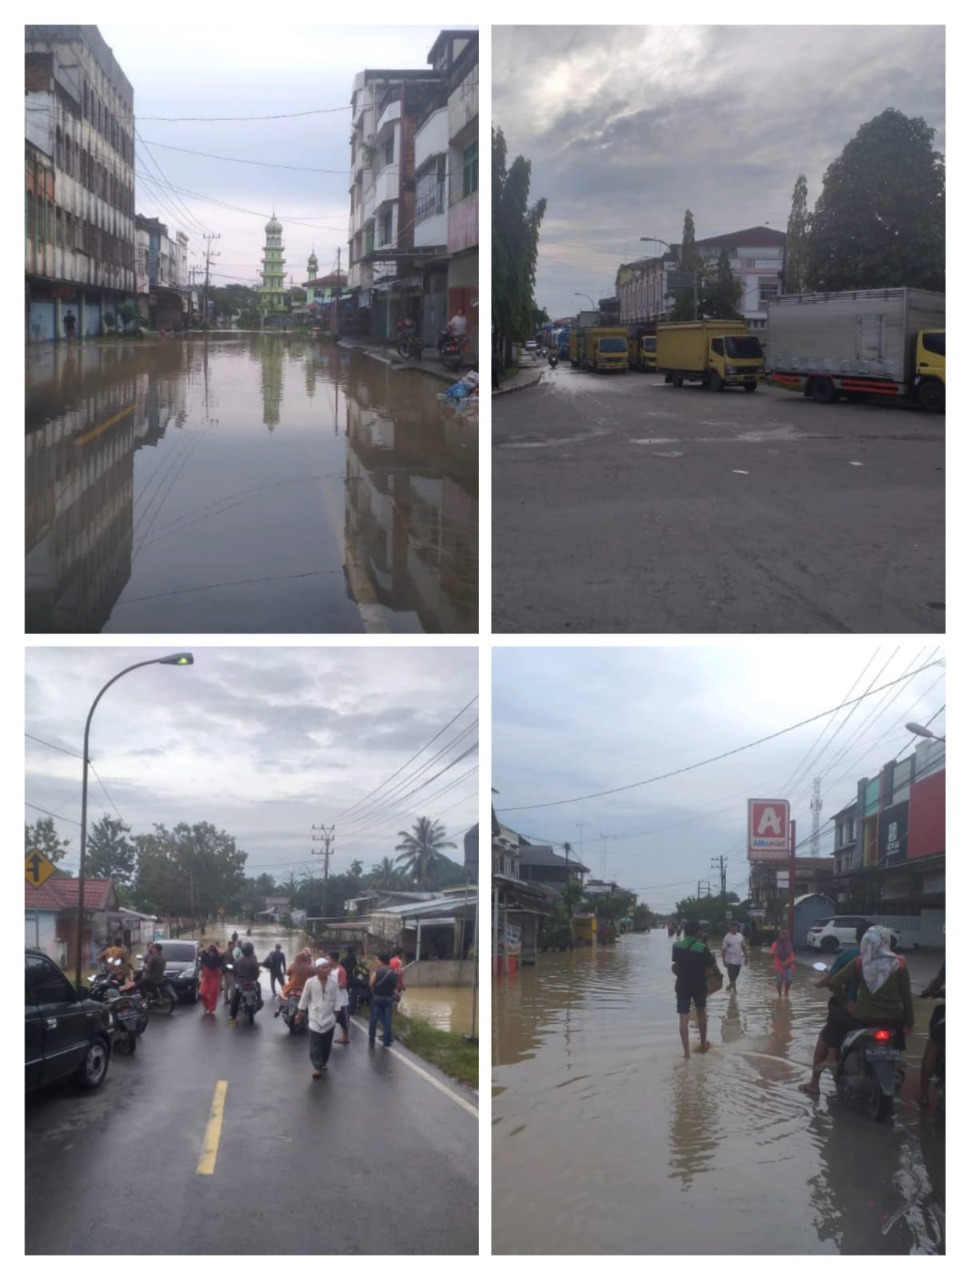 Antrian kendaraan truck dan mobil pribadi dari arah Kualasimpang, Aceh yang terjebak banjir dan tidak dapat melintas menuju Sumatera Utara dikarenakan air banjir menggenangi badan jalan dikawasan Bukit Rata, Kejuruan Muda. beritasore/ist